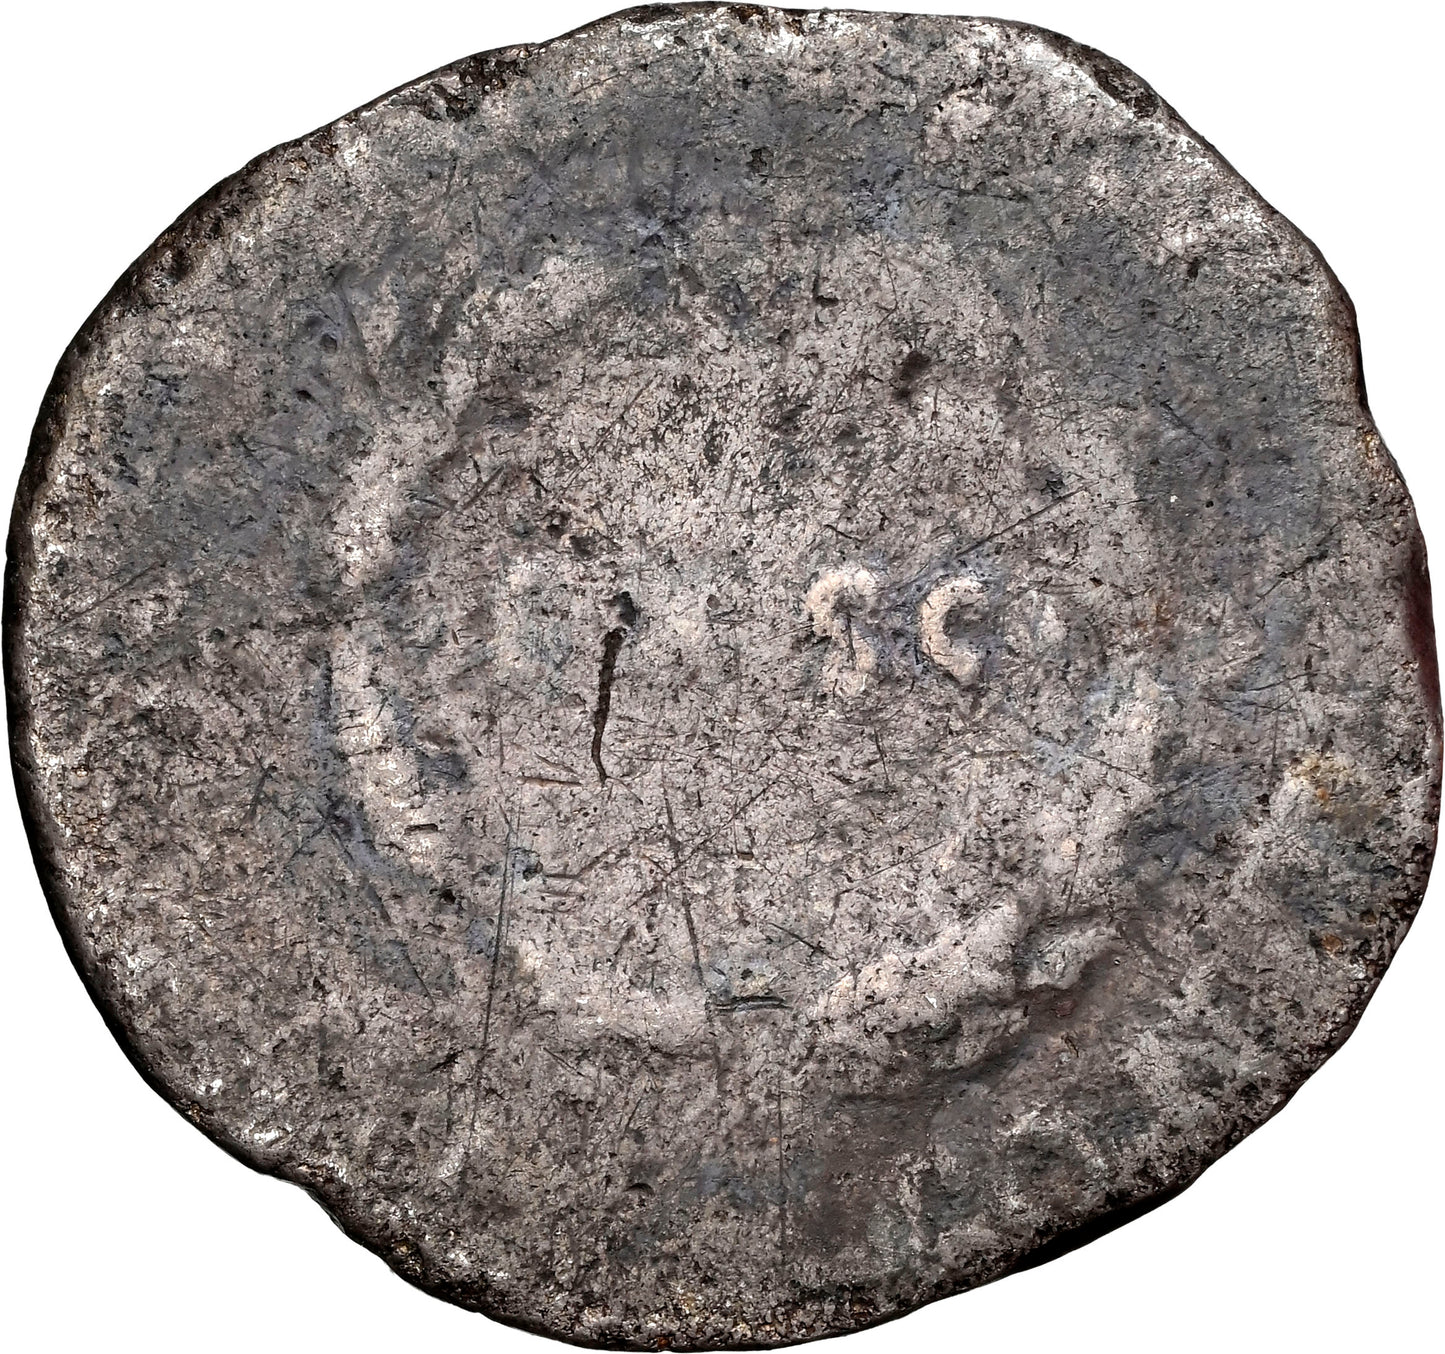 Roman Empire - Nero - Silver Denarius - NGC G - RIC:18/23